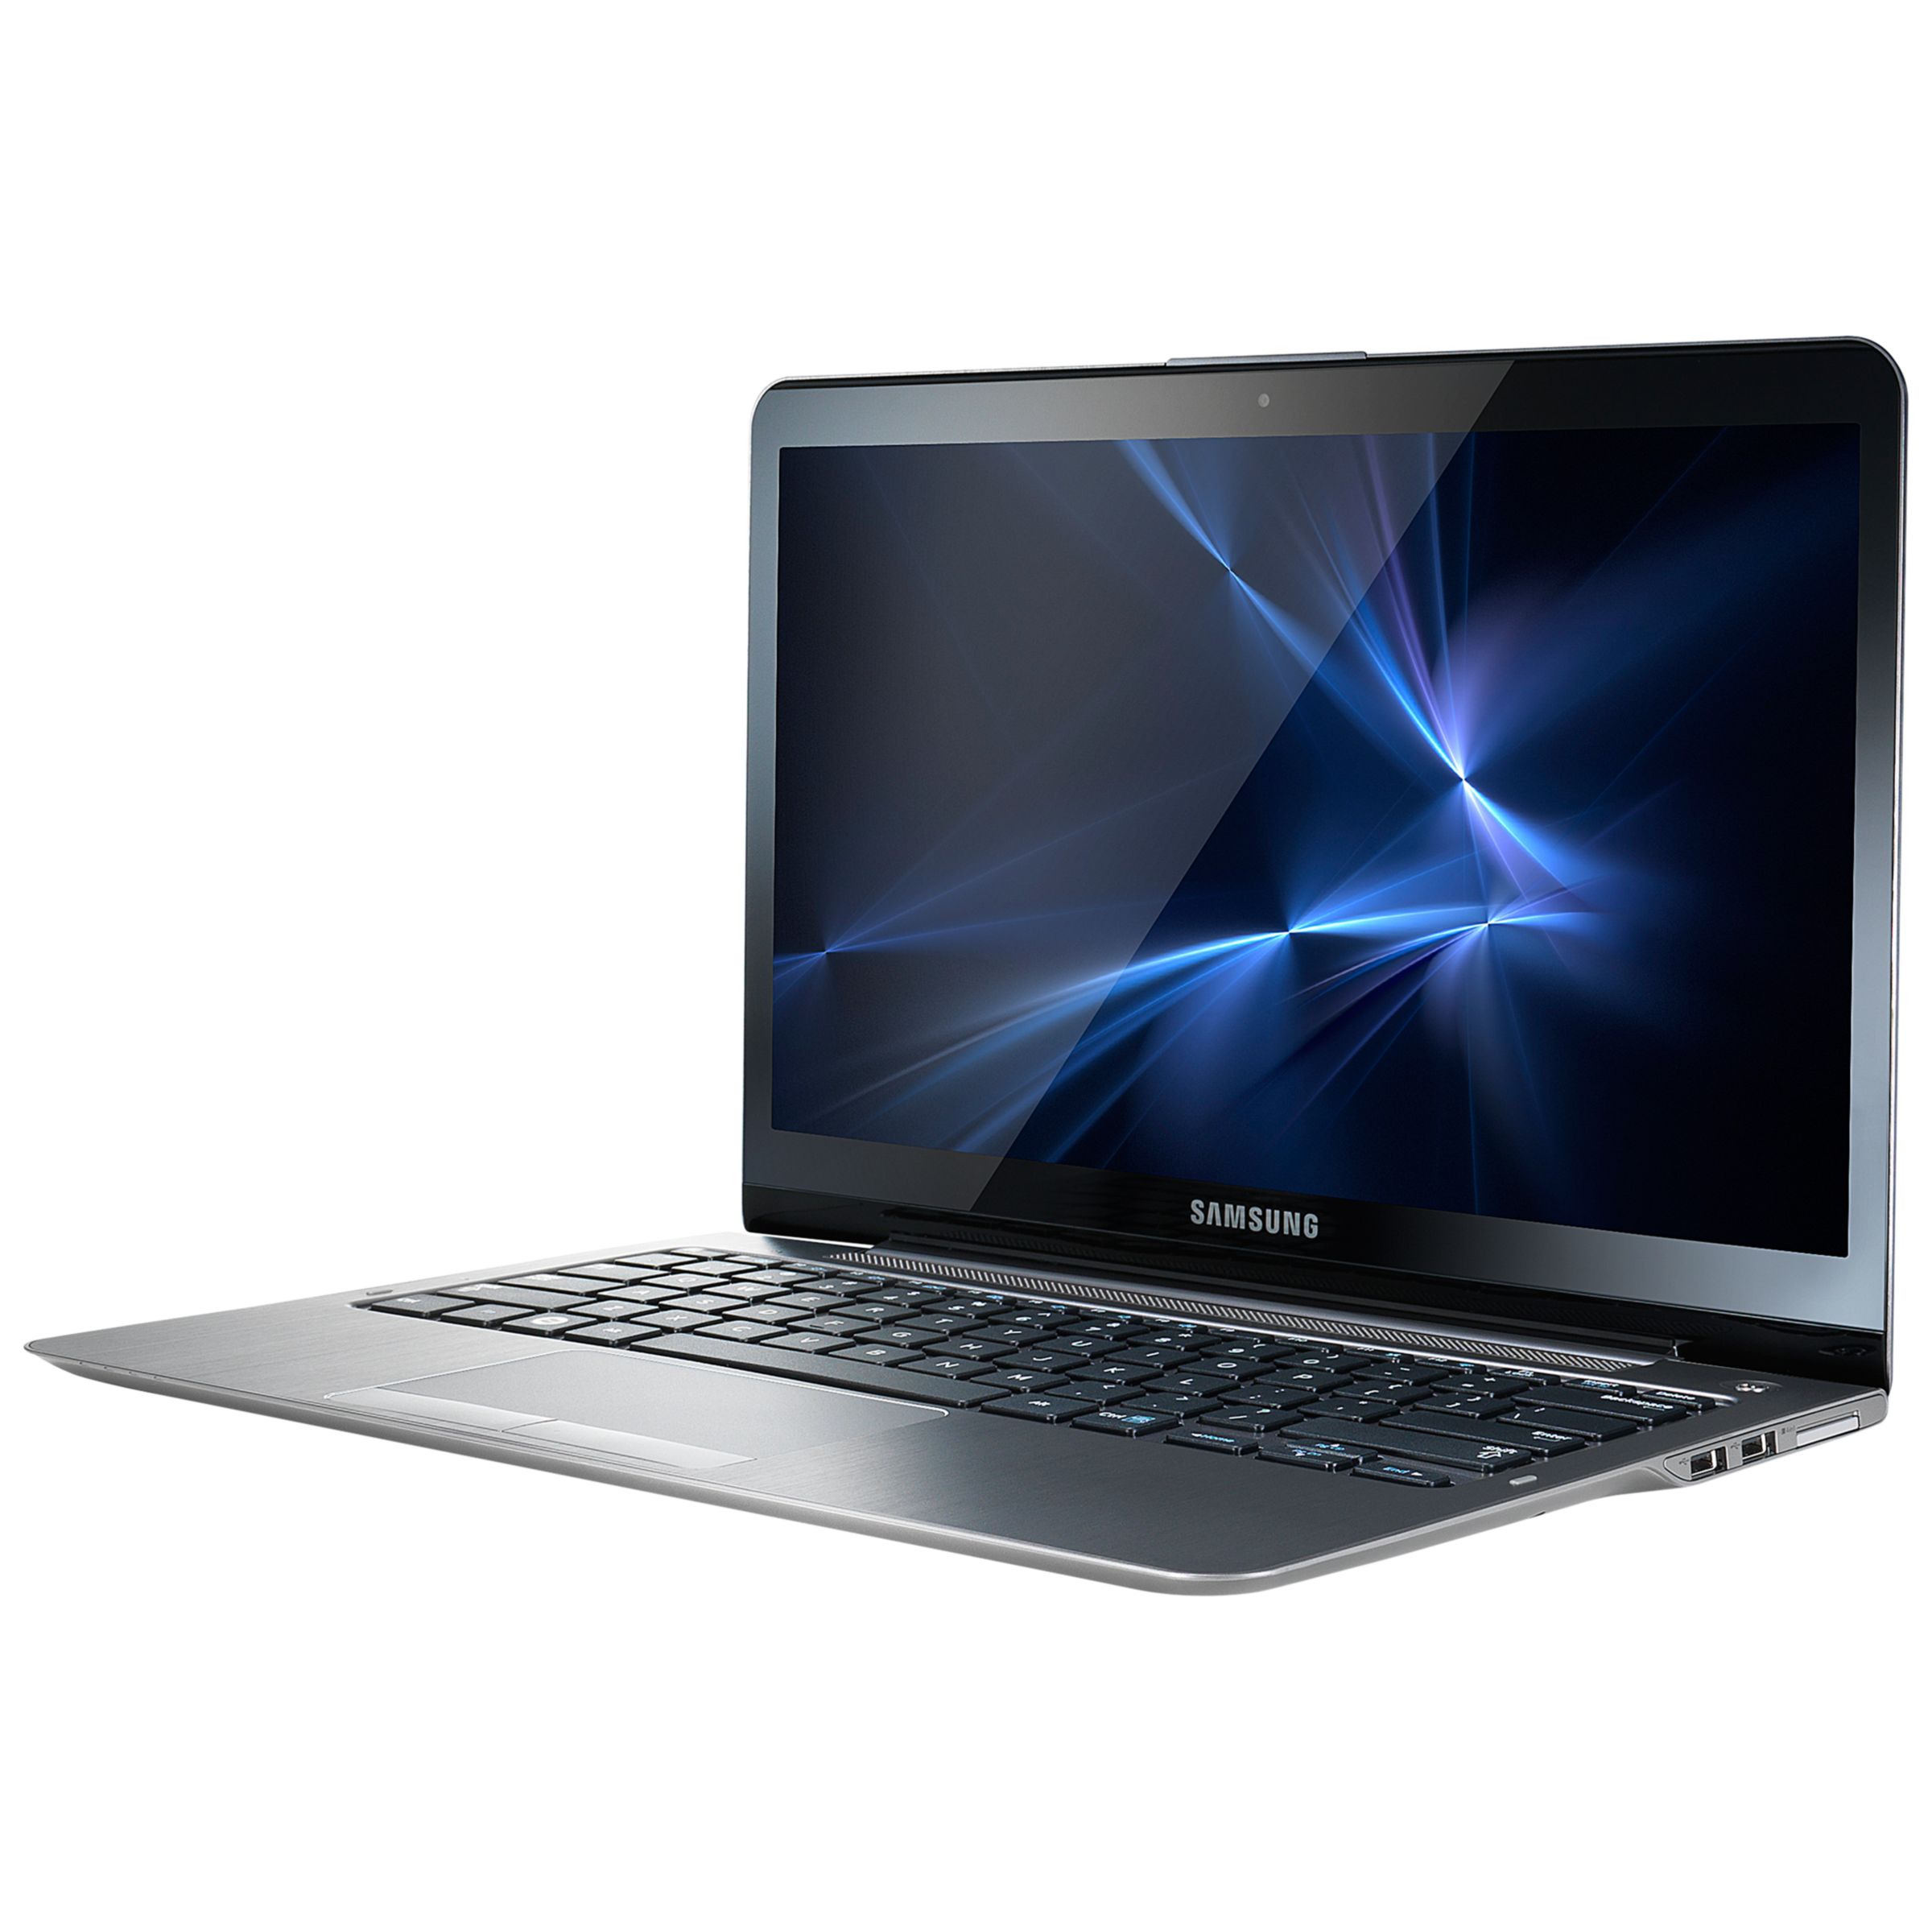 Samsung NP540U3C-A01 Ultrabook, Intel Core i5, 1.7GHz, 6GB RAM, 500GB ...